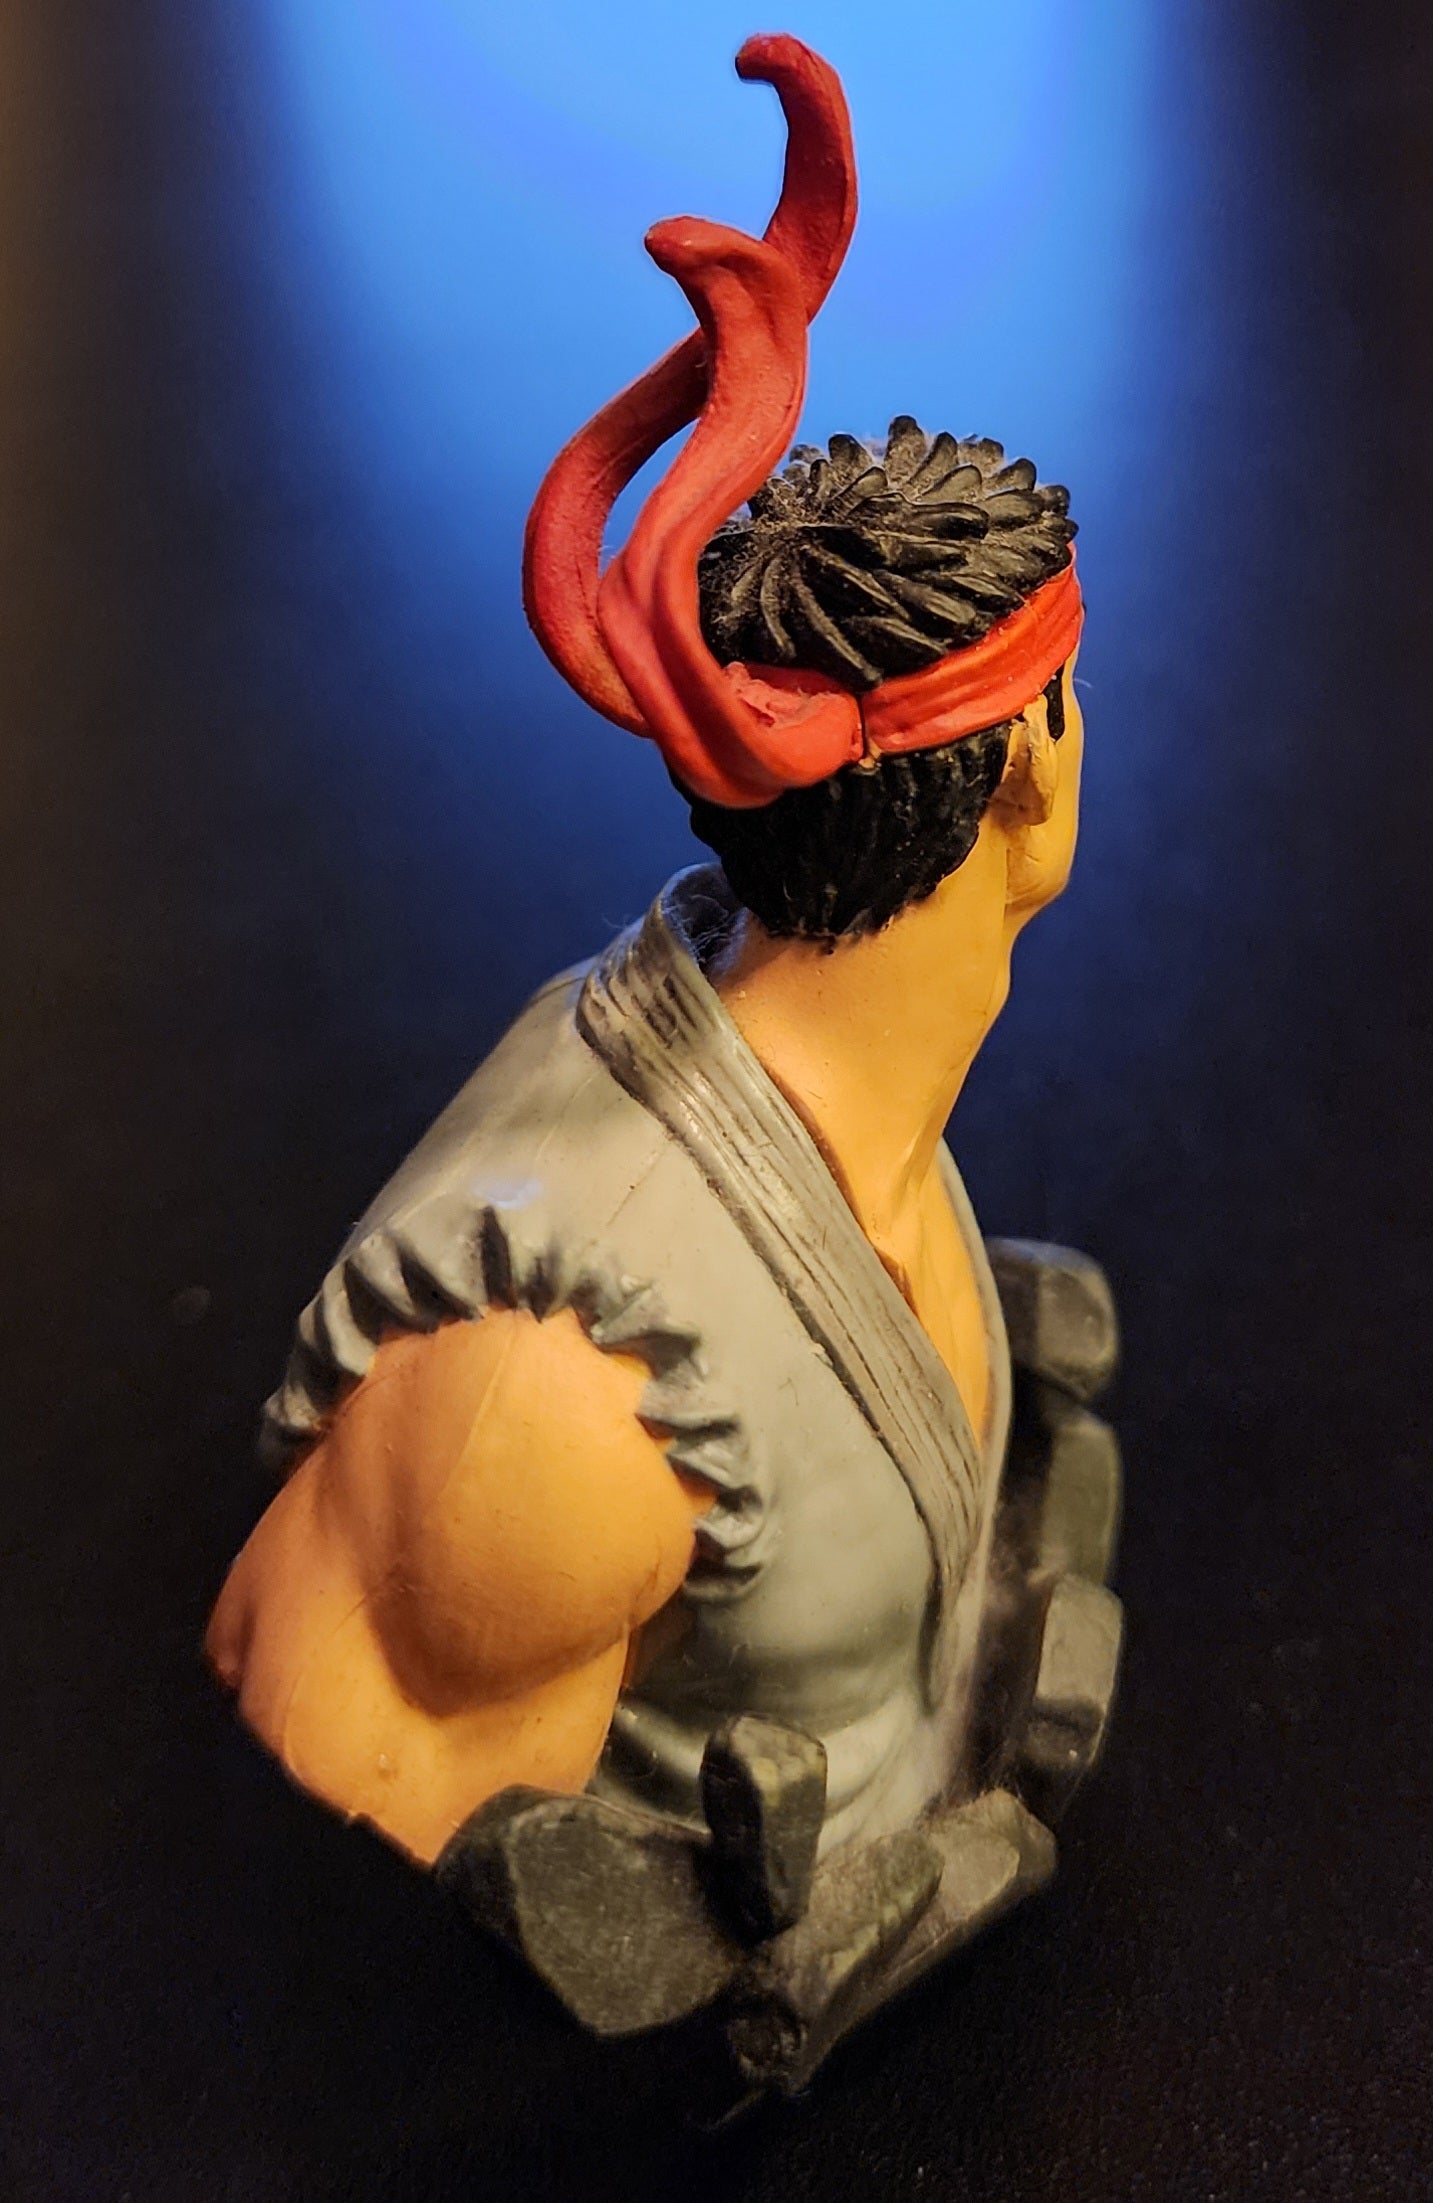 Ryu Street Fighter 15th Anniversary Mini Bust Figure